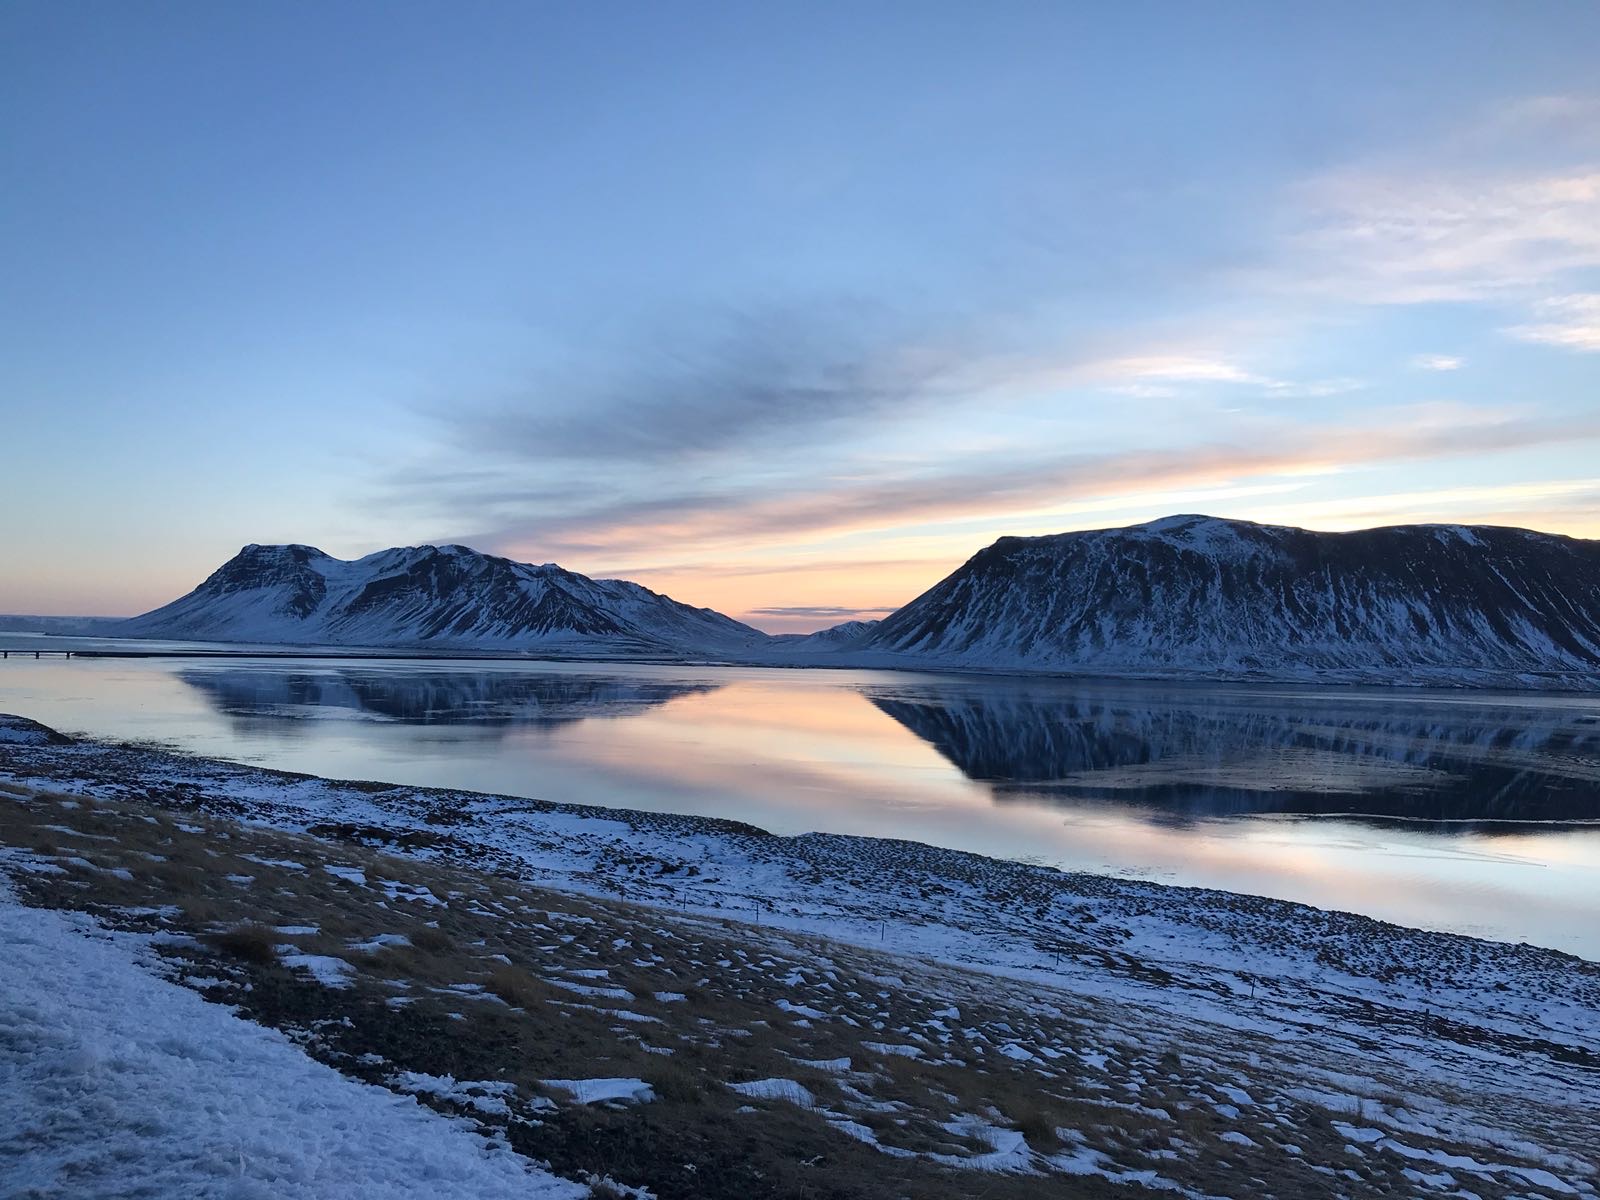 Landscape in Iceland